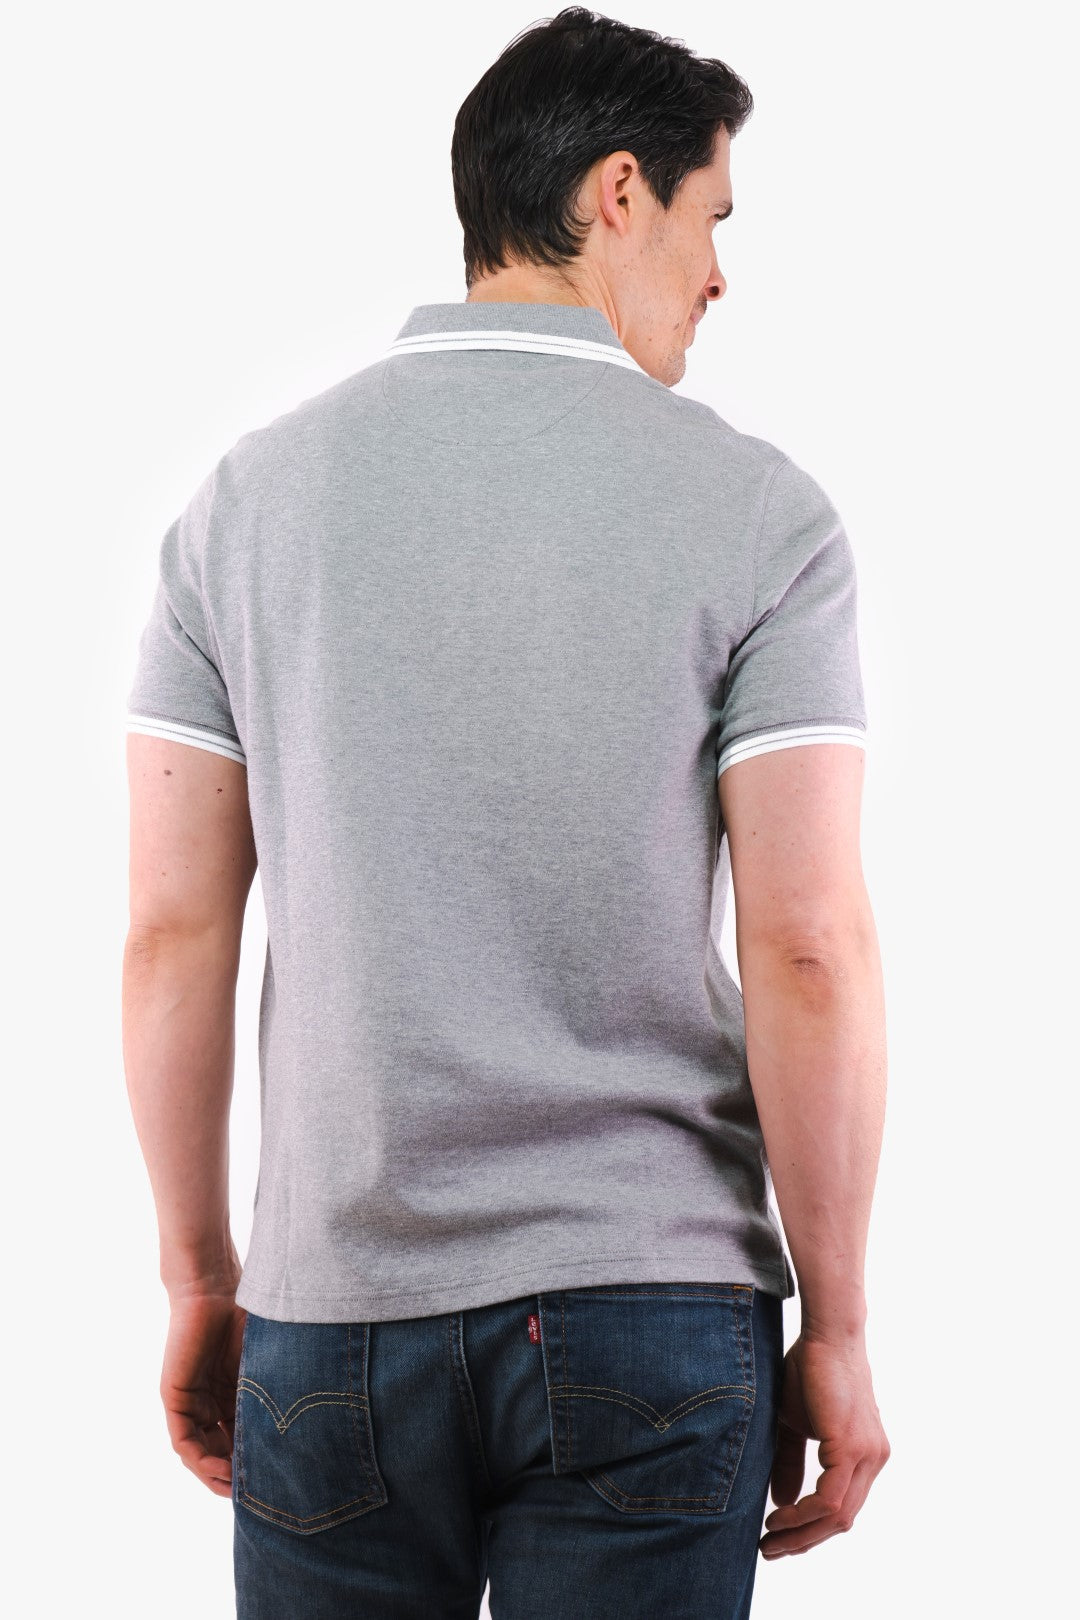 Michael Kors Short Sleeve Polo Shirt in Gray color